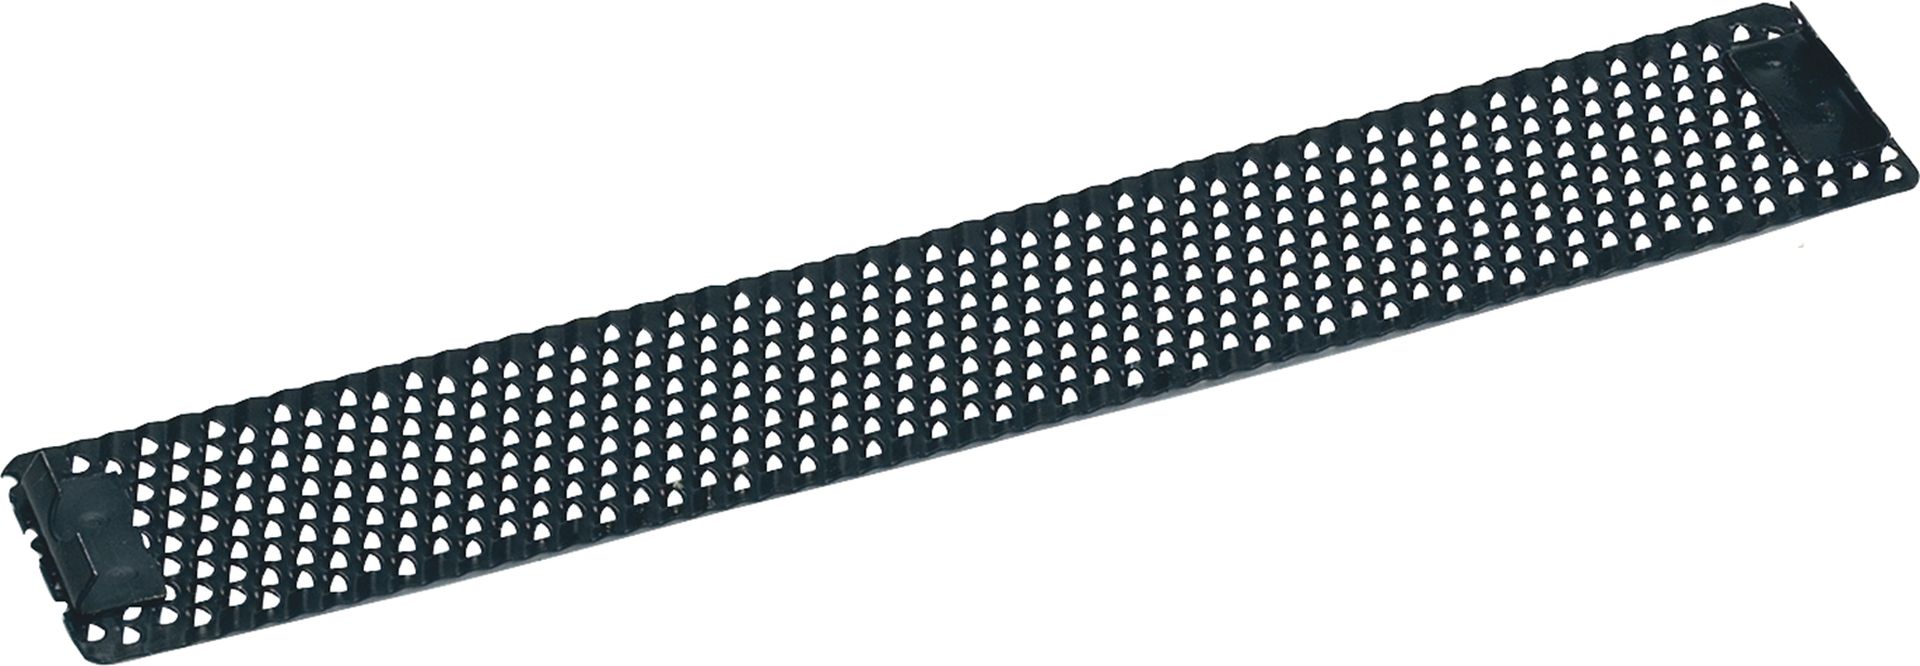 TRIUSO Ersatzblatt für Gipskarton Standardhobel, 42 x 250 mm